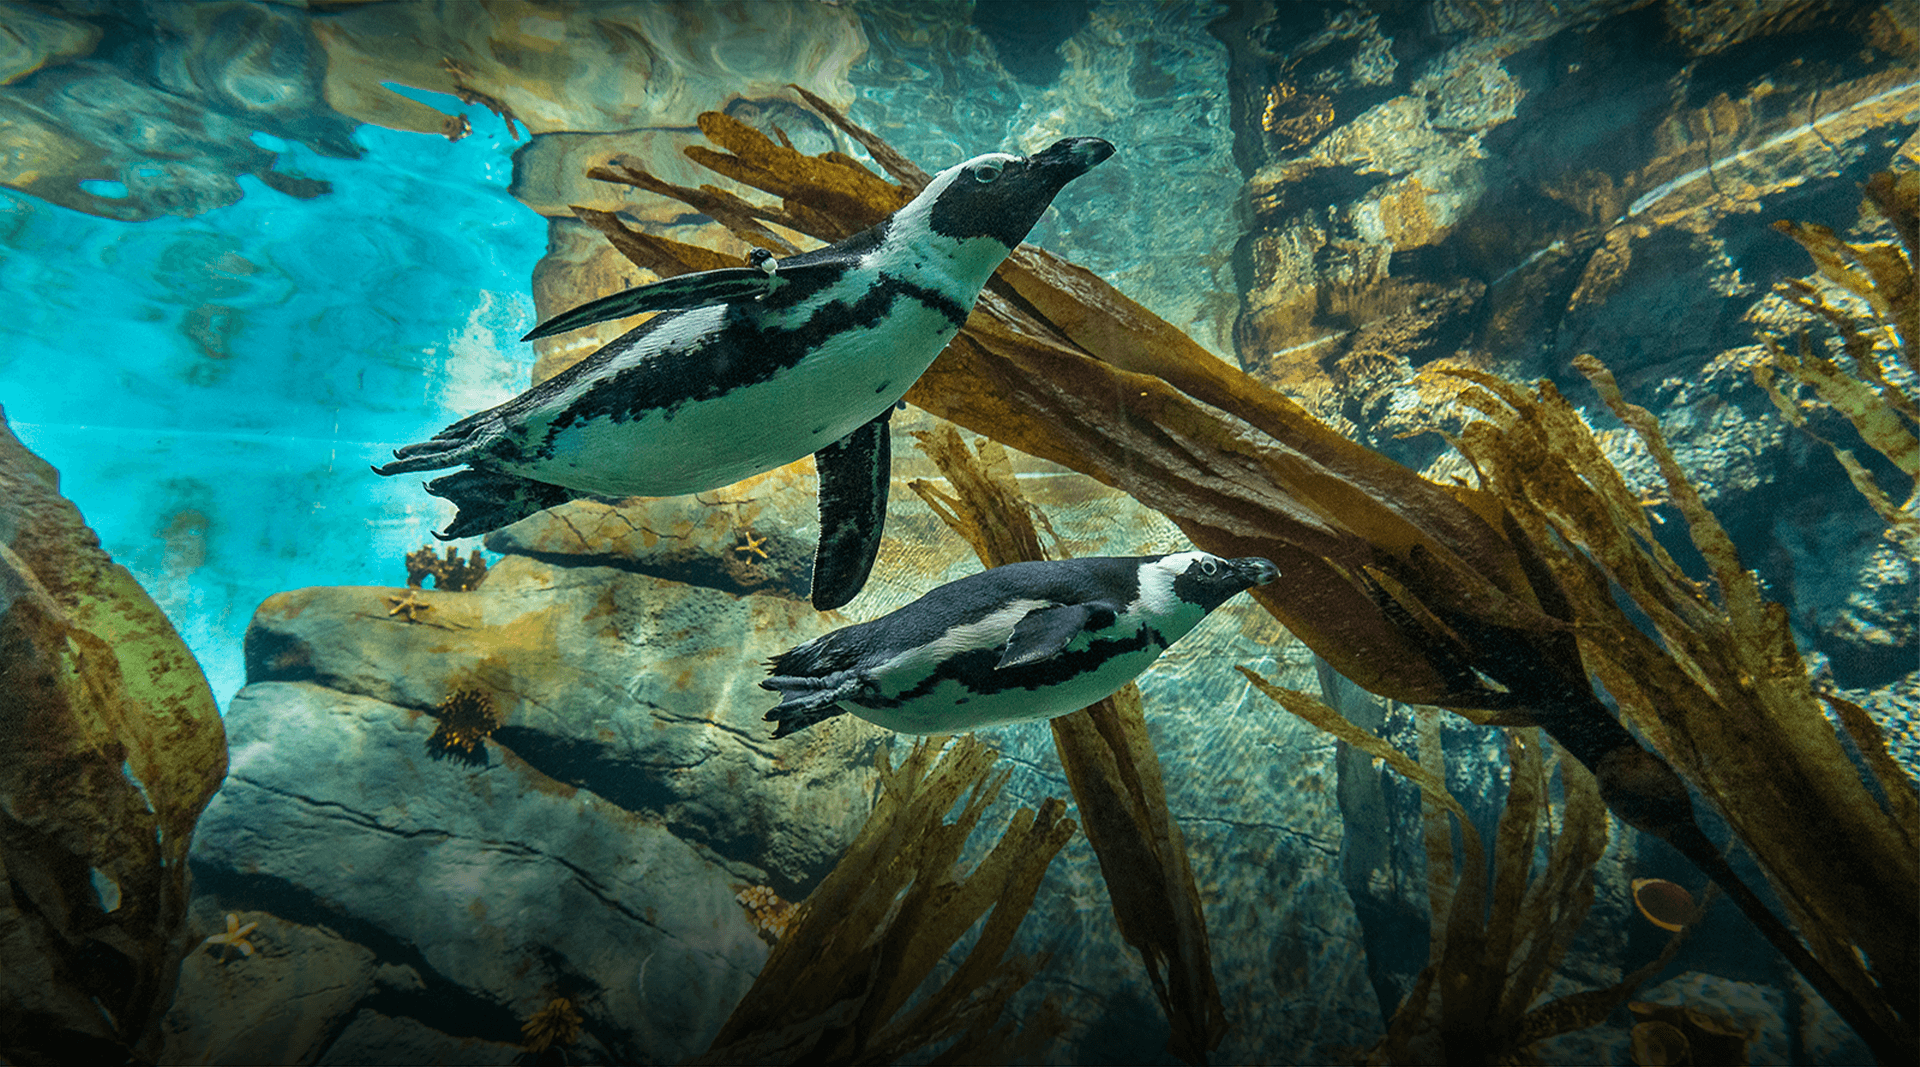 Two penguins swim underwater.